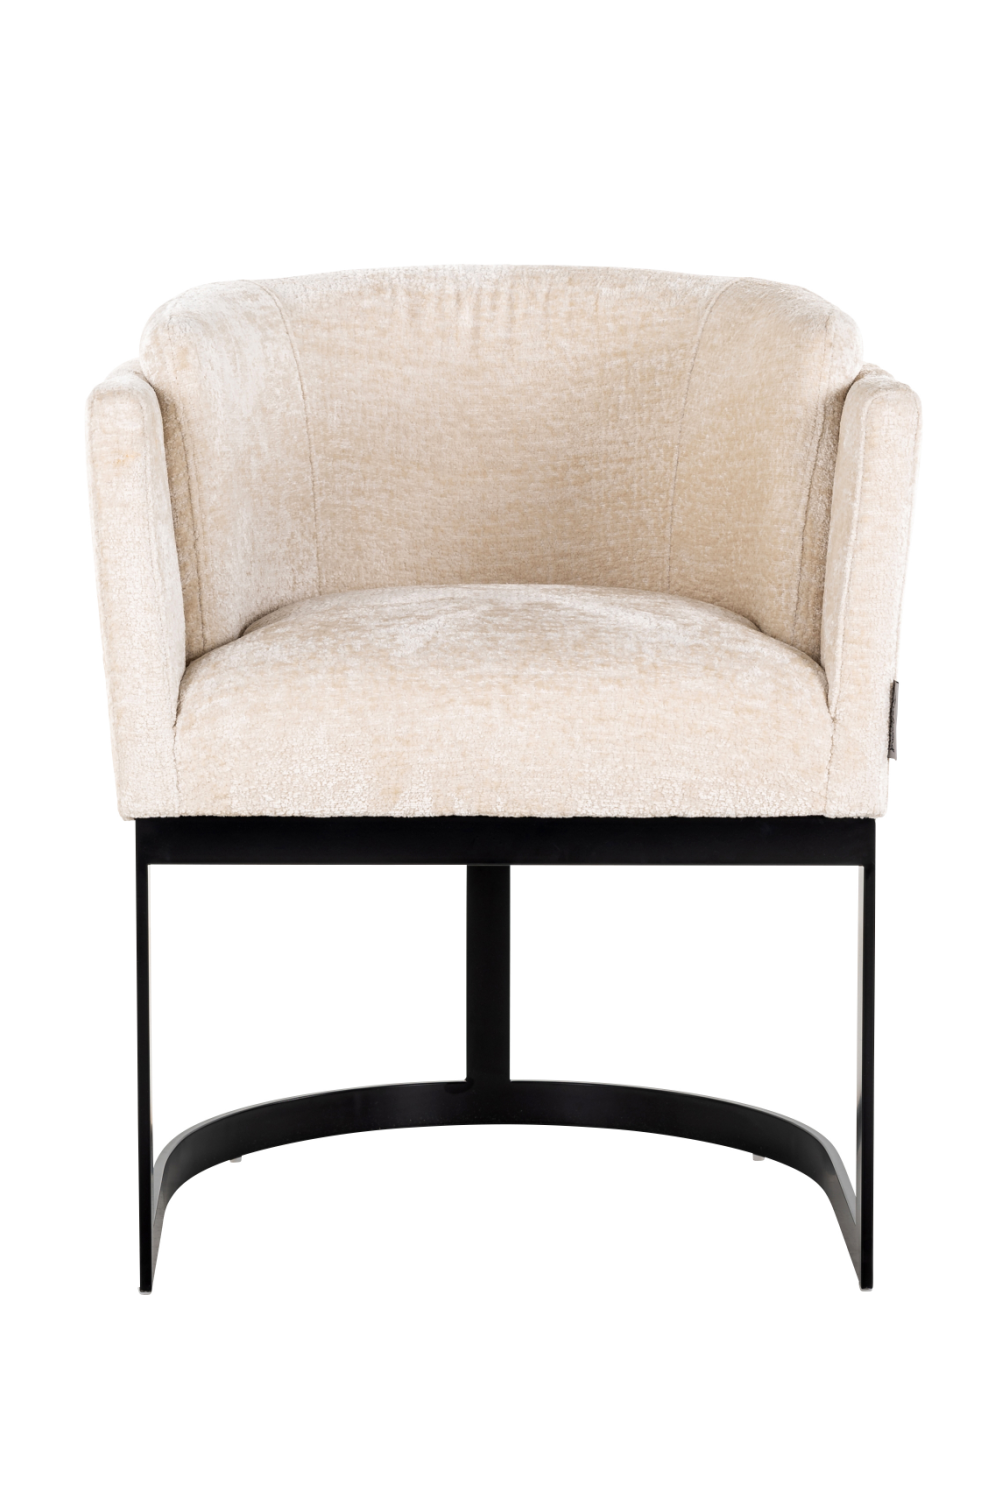 White Chenille Modern Chair OROA Emerson OROA - OROA